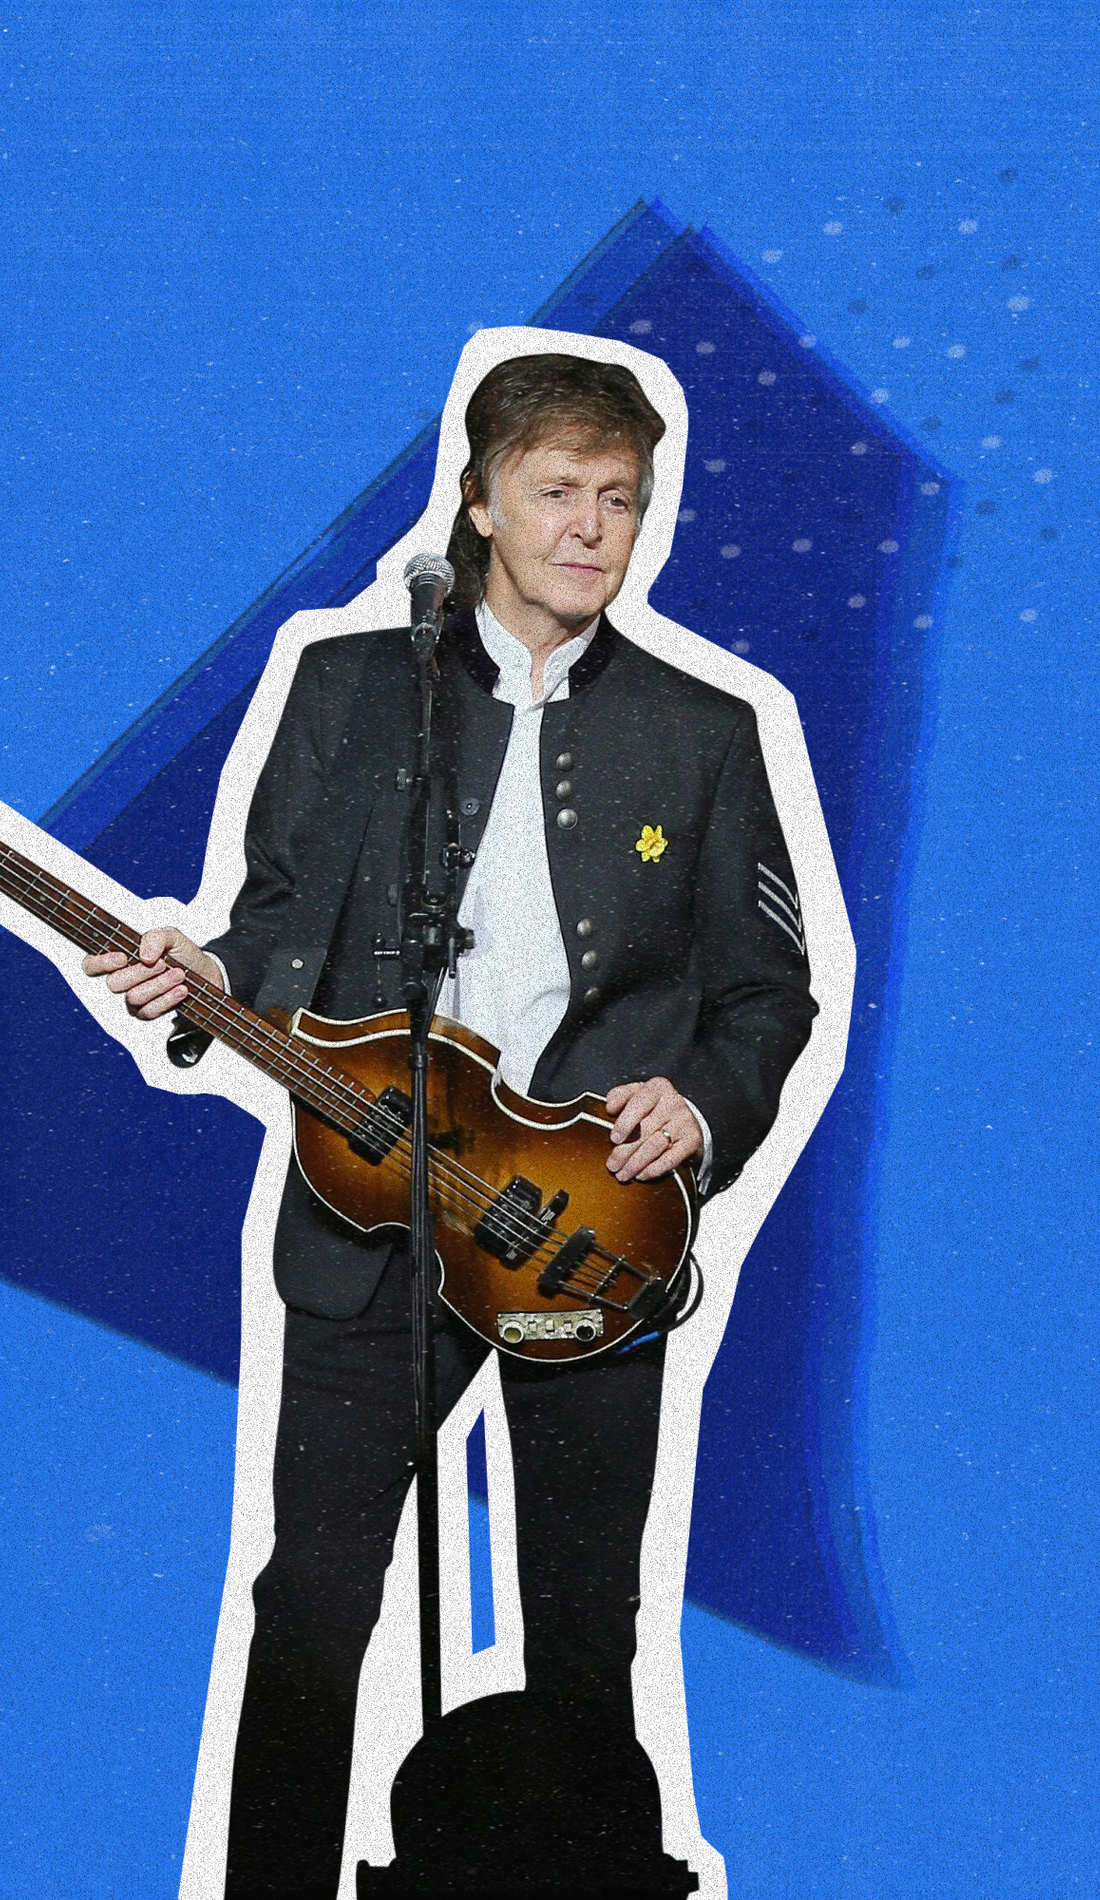 A Paul McCartney live event